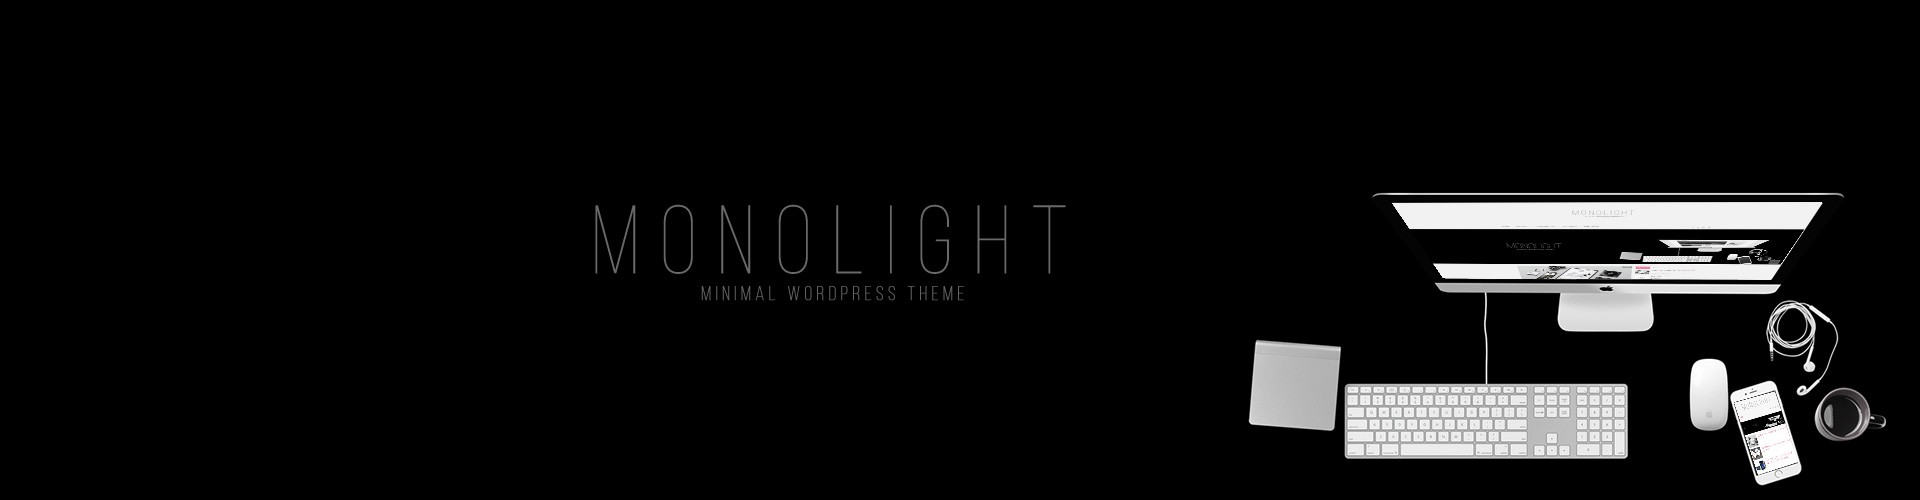 monolight_slide1